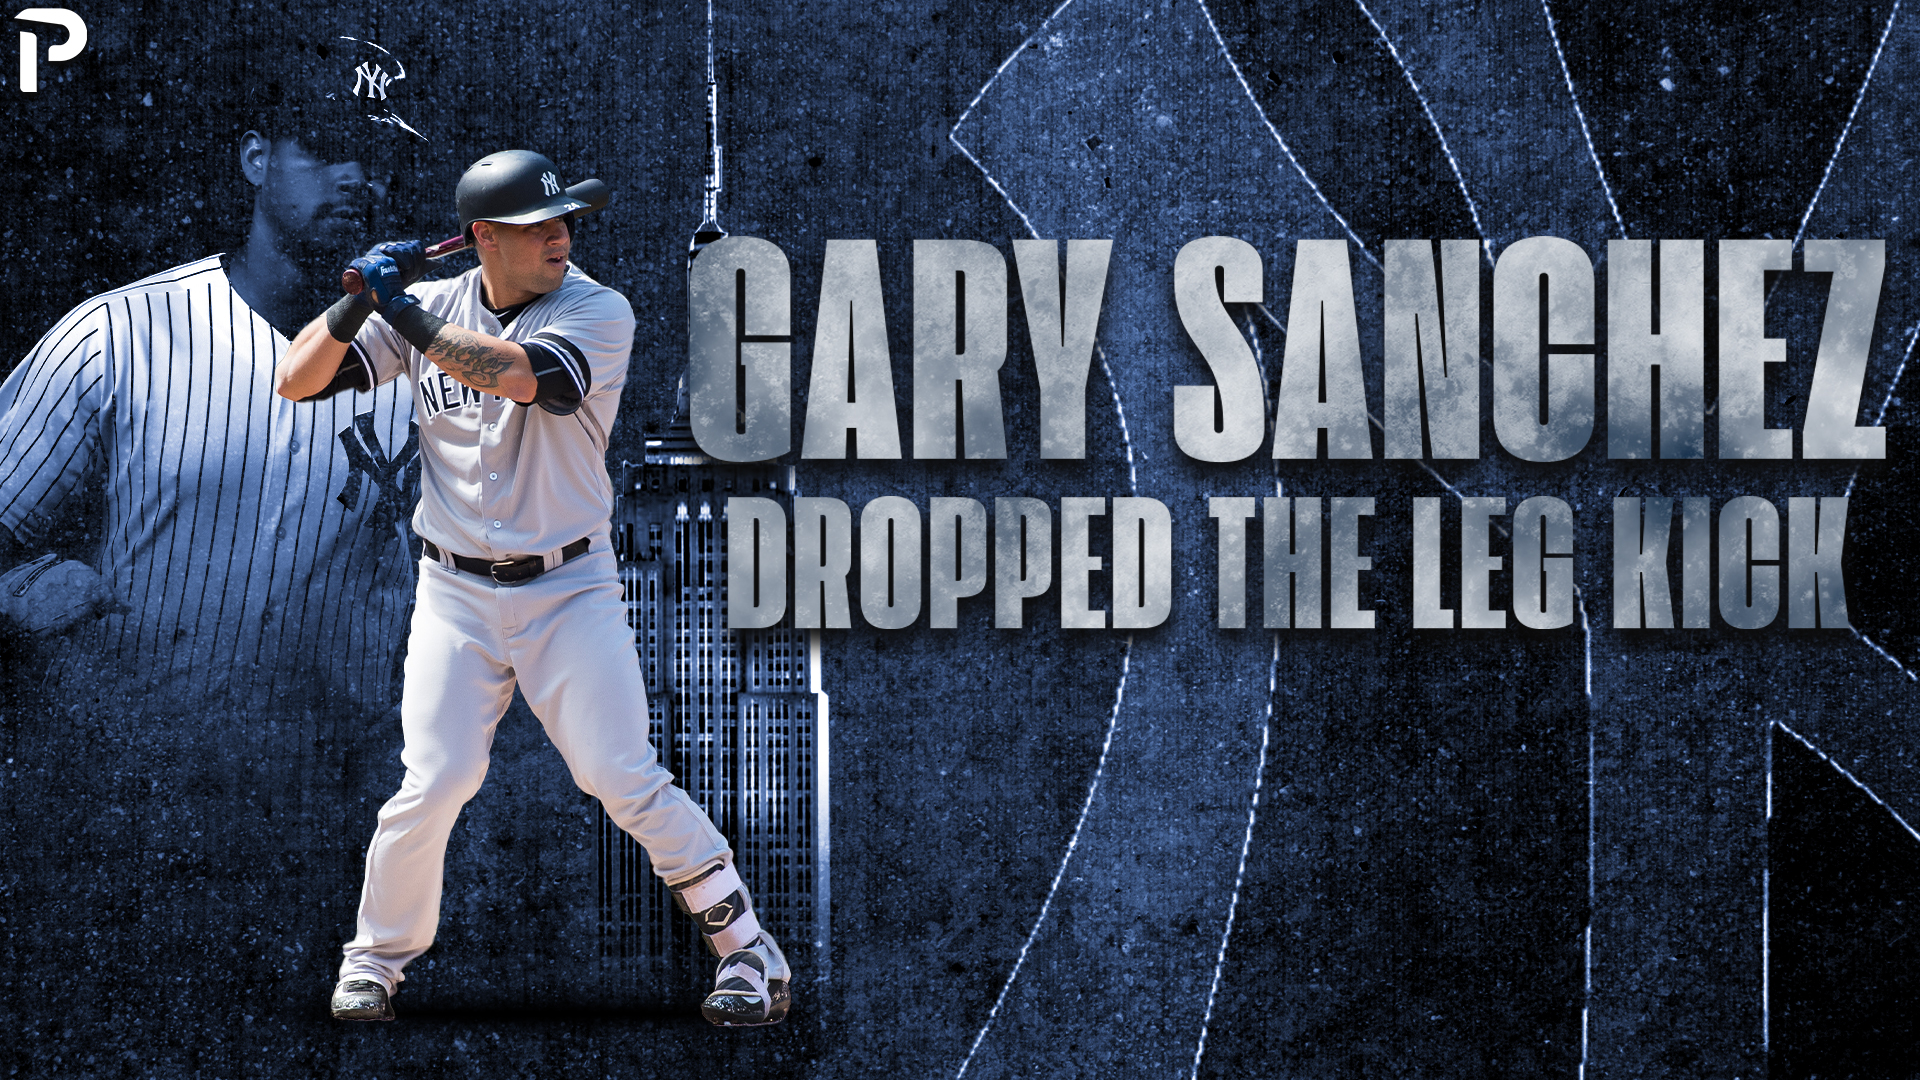 Gary Sánchez Dropped the Leg Kick